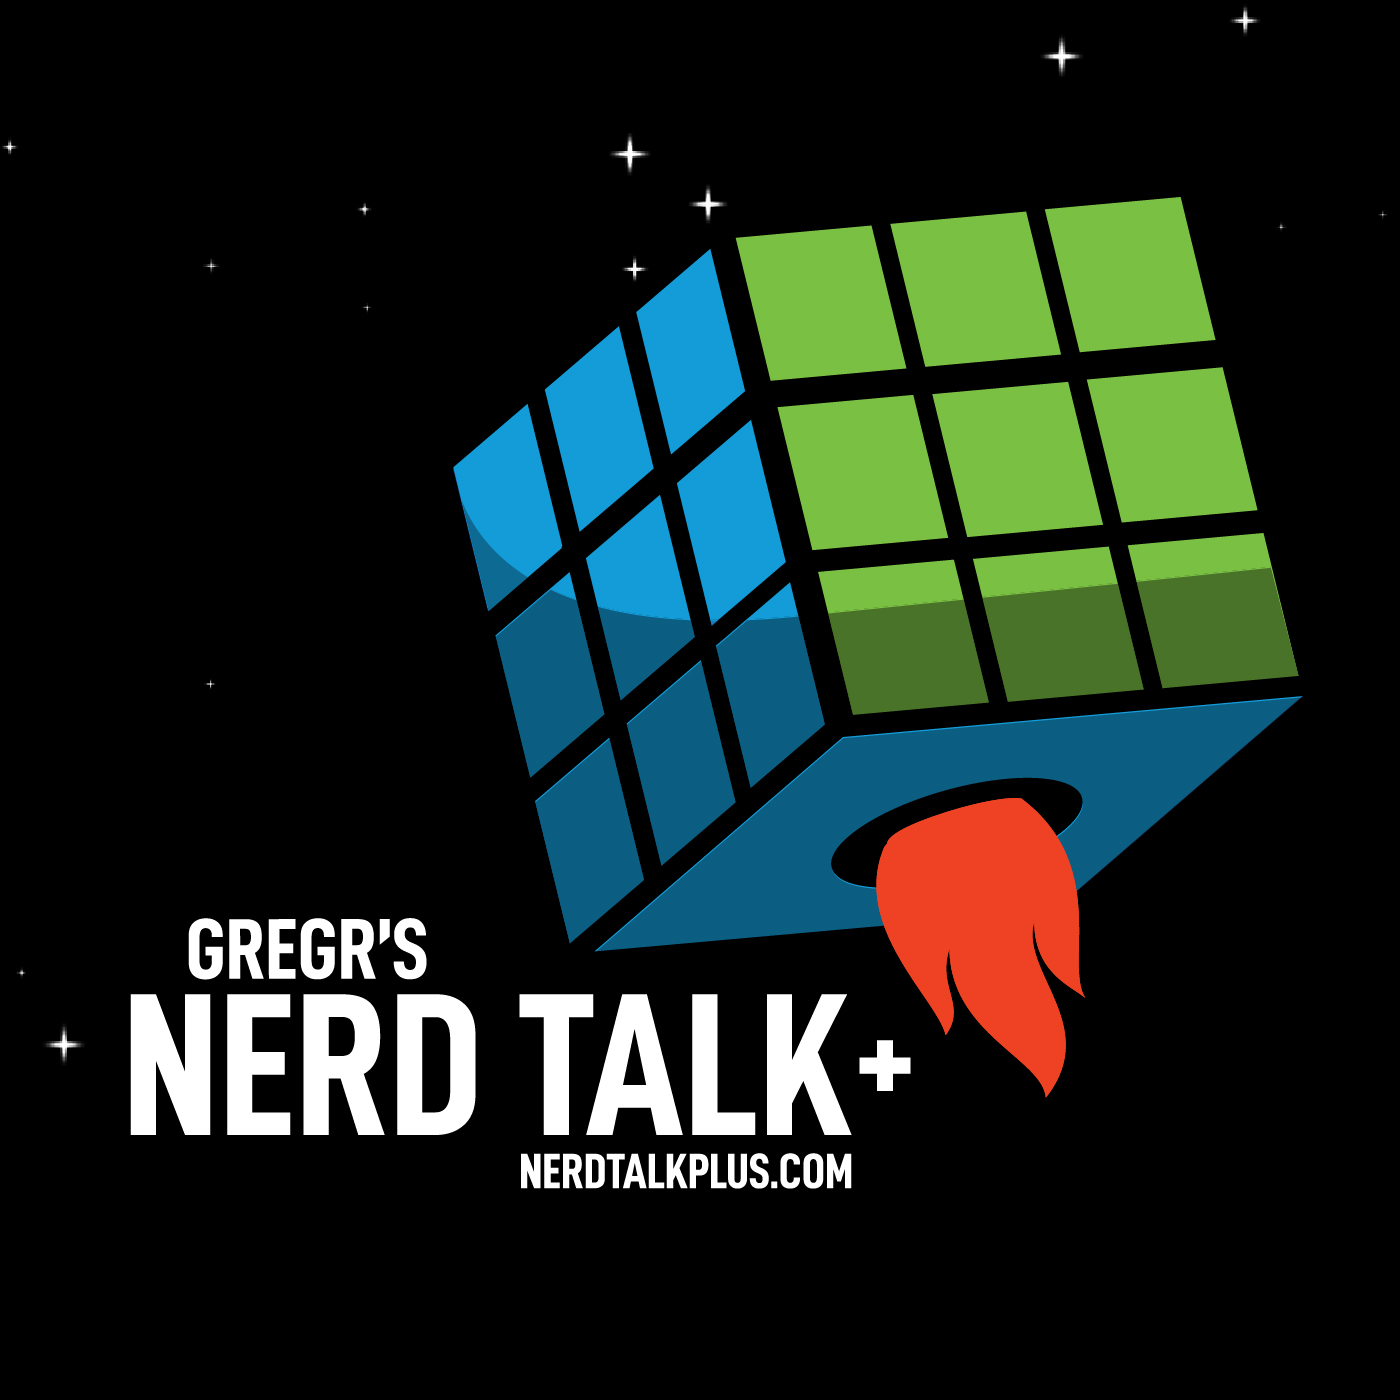 February 14, 2023 - Nerd Talk+